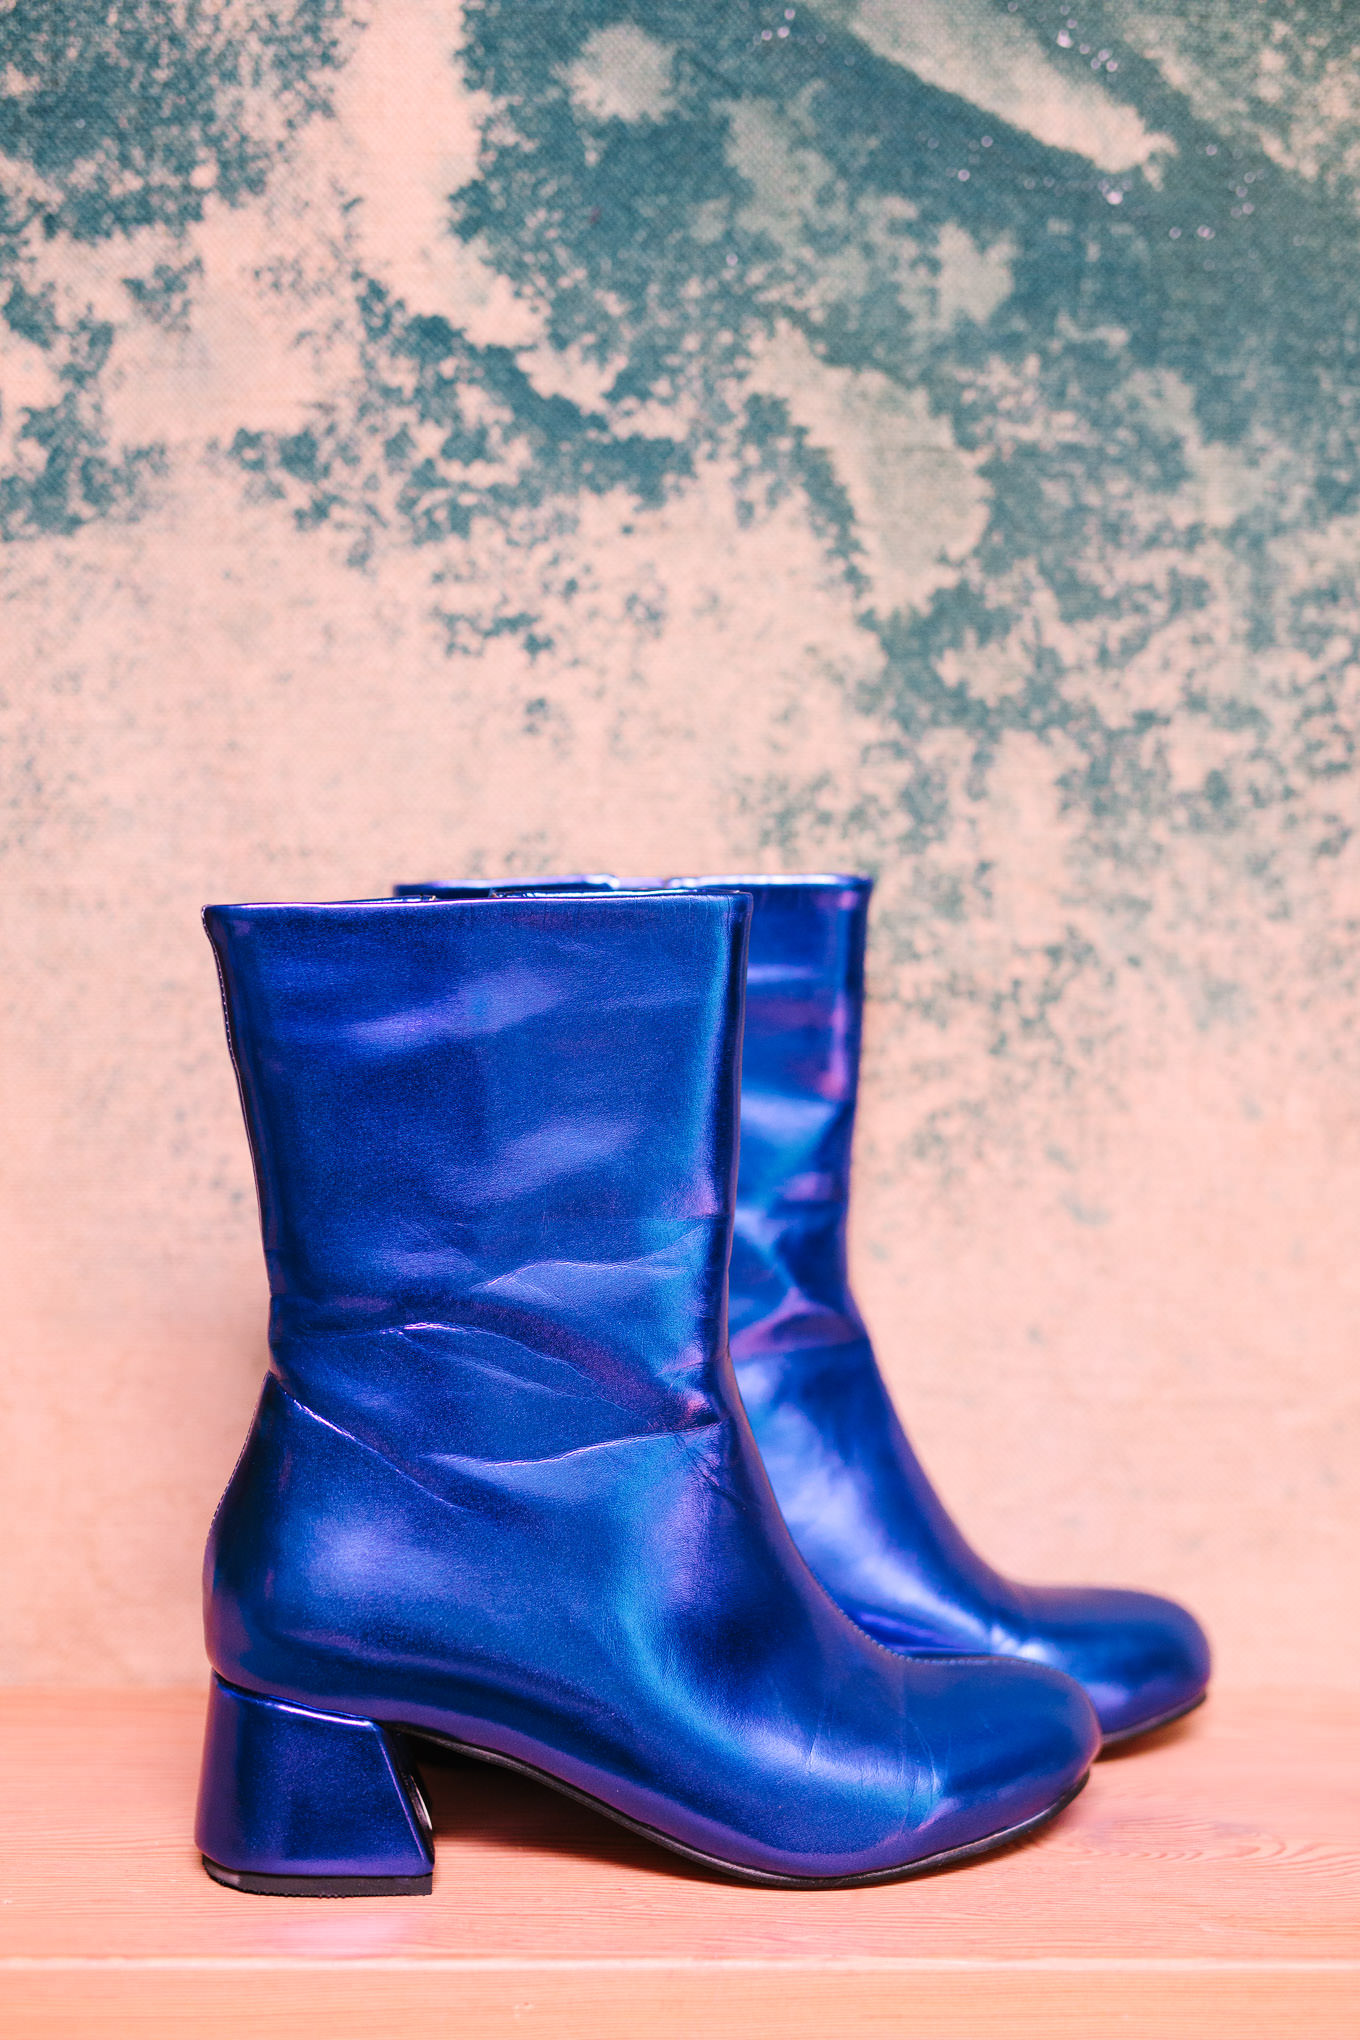 Blue bridal boots | Colorful Downtown Los Angeles Valentine Wedding | Los Angeles wedding photographer | #losangeleswedding #colorfulwedding #DTLA #valentinedtla   Source: Mary Costa Photography | Los Angeles